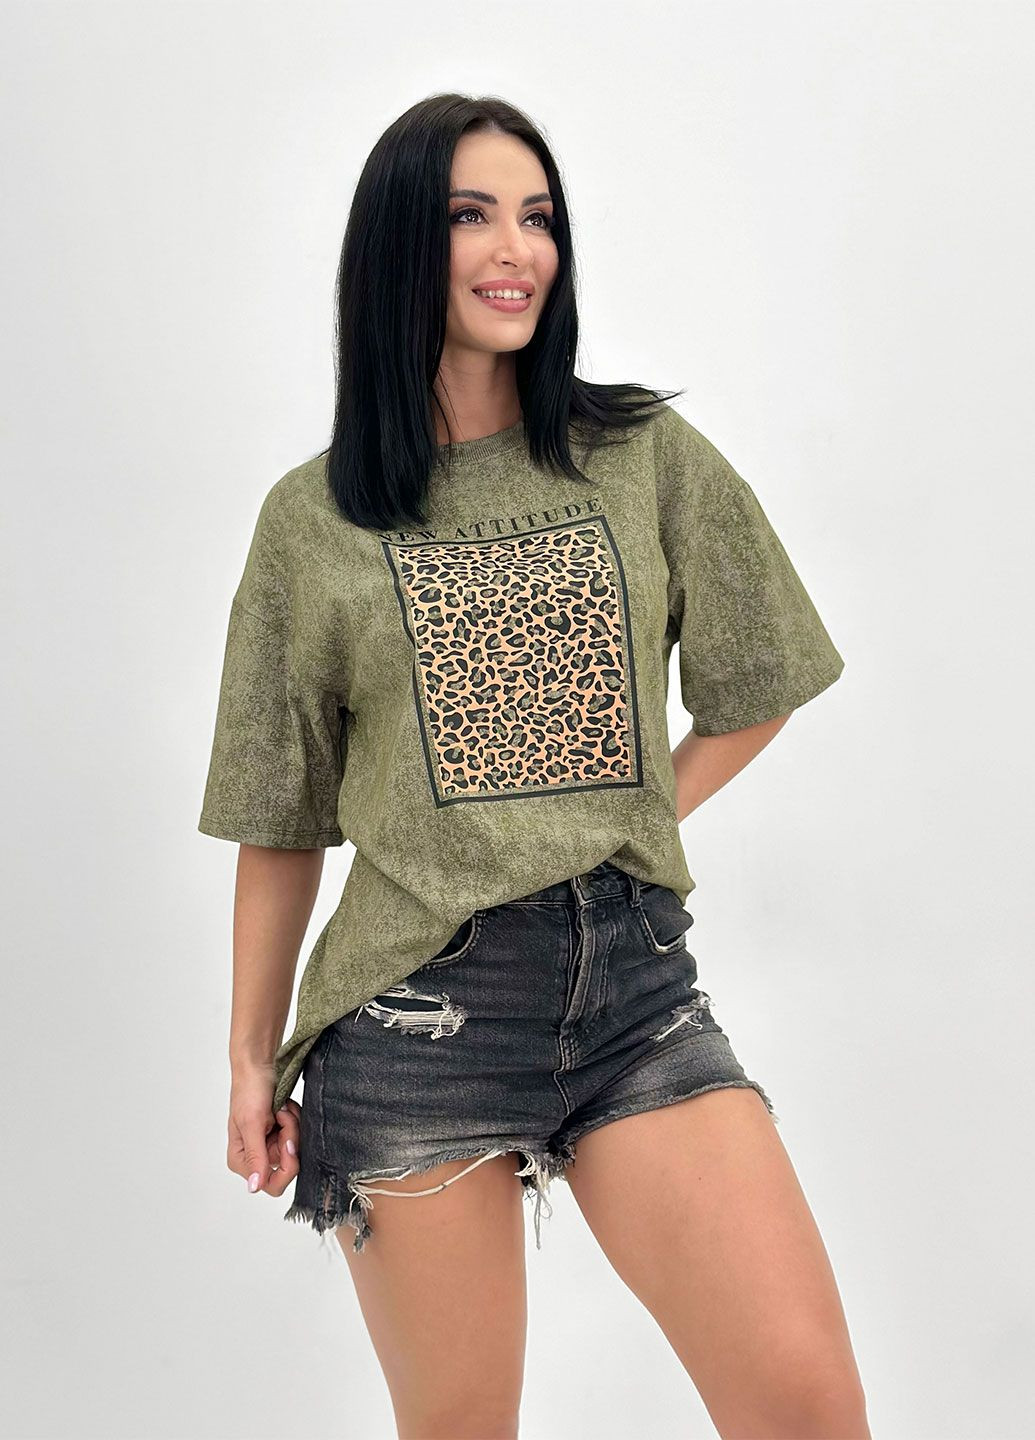 Хаки (оливковая) женская футболка с коротким рукавом Fashion Girl Roar